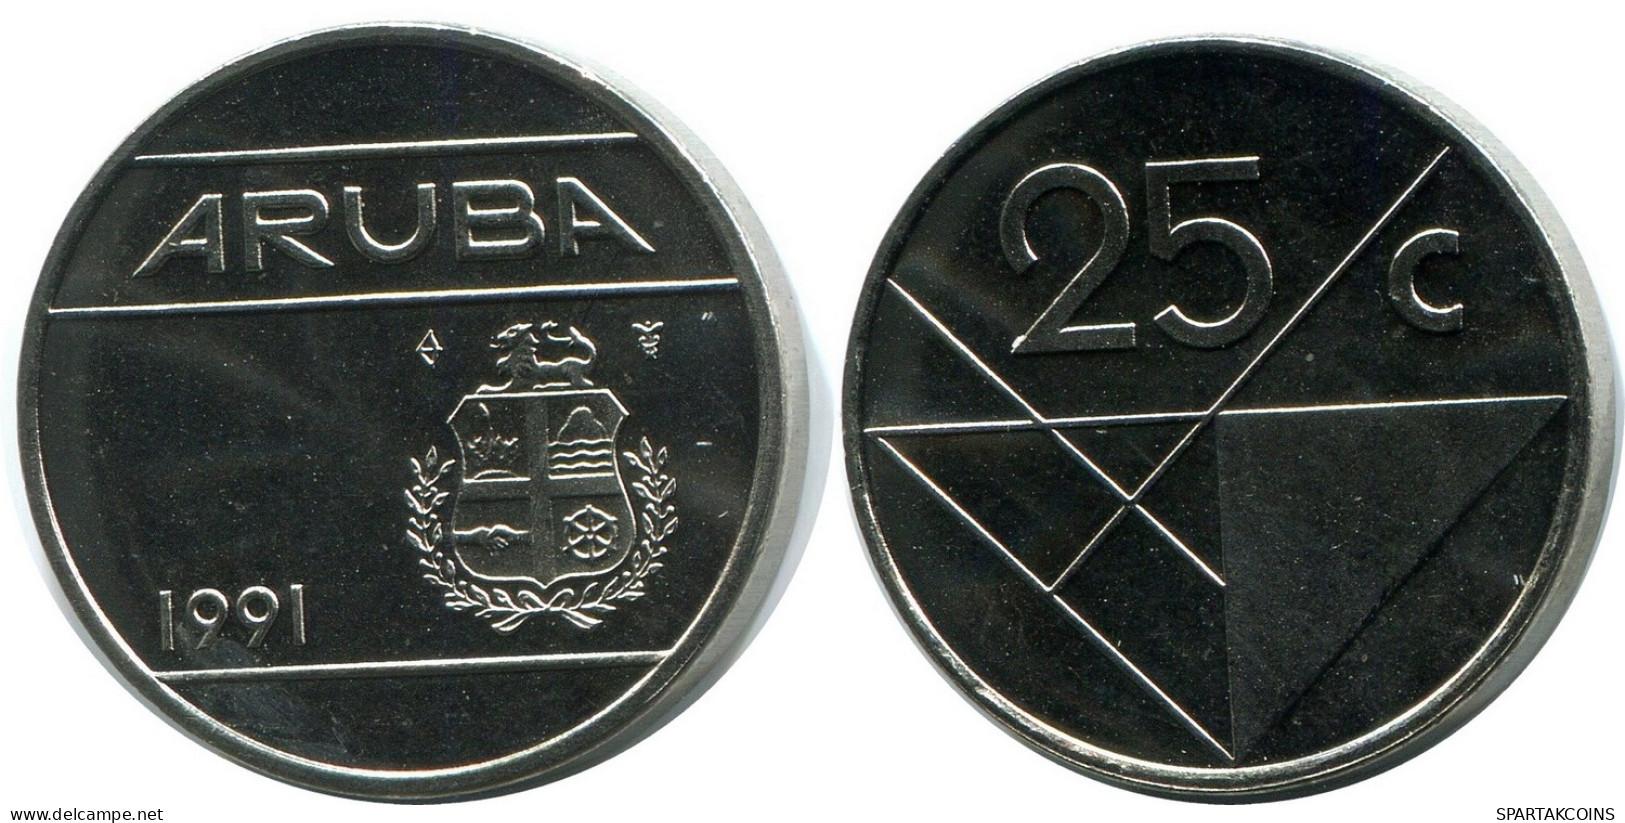 25 CENTS 1991 ARUBA Coin (From BU Mint Set) #AH068.U - Aruba